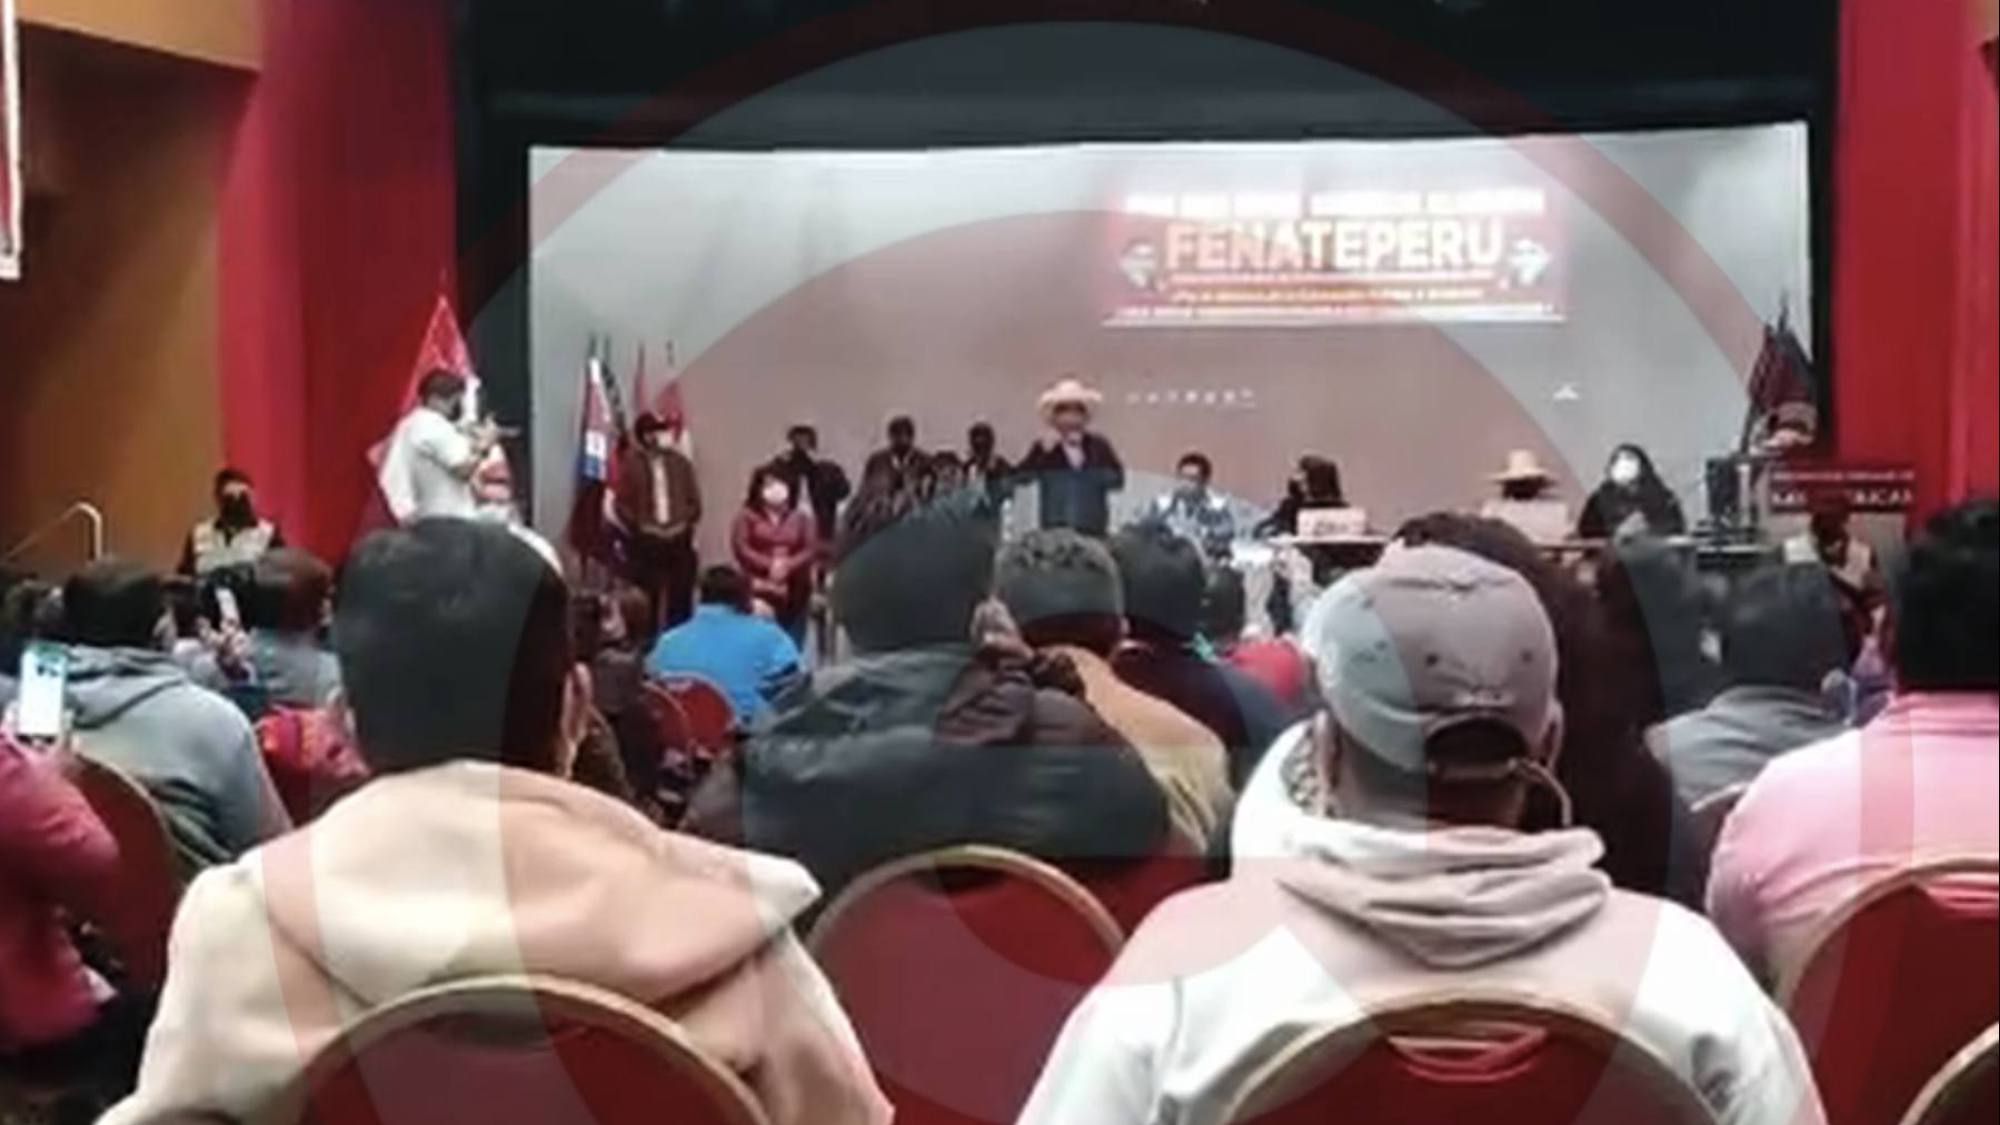 FENATE, el nuevo sindicato fuerte, viene con padrino, Epicentro TV